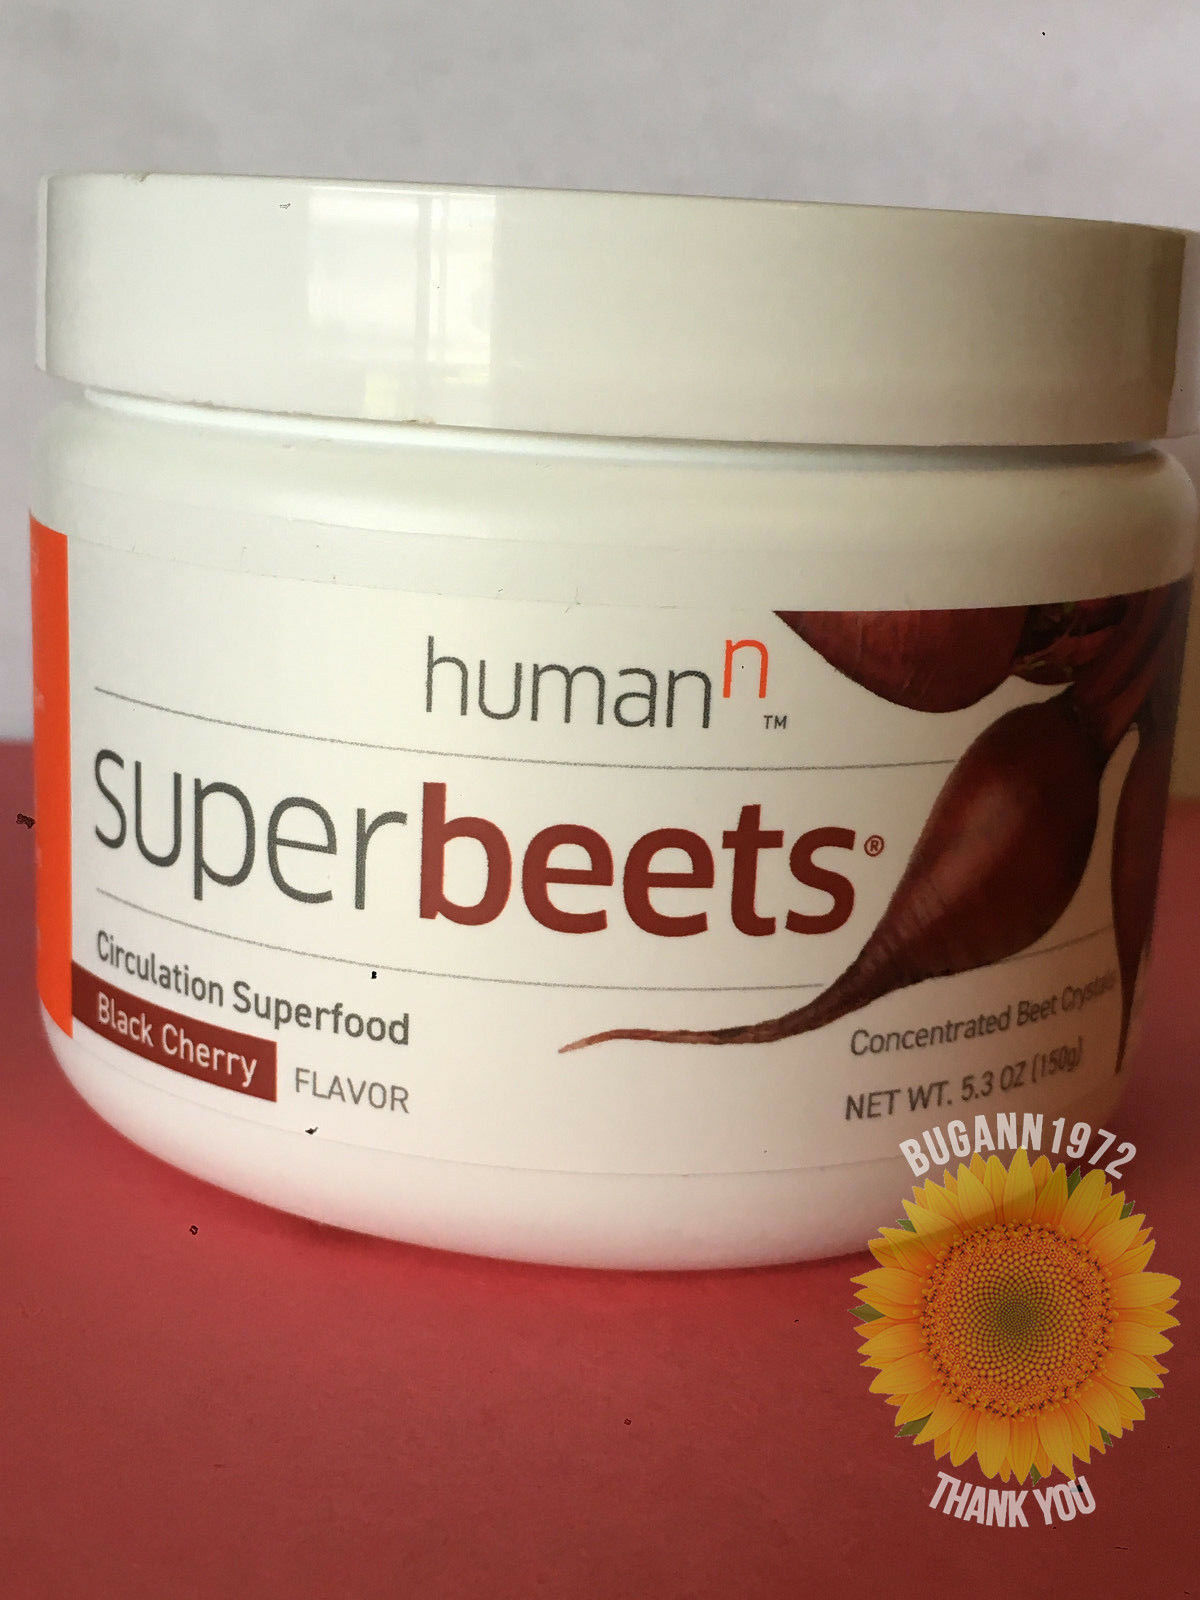 Super Beets   Circulation Superfood  Black Cherry  Ships Free Same Day   Humann